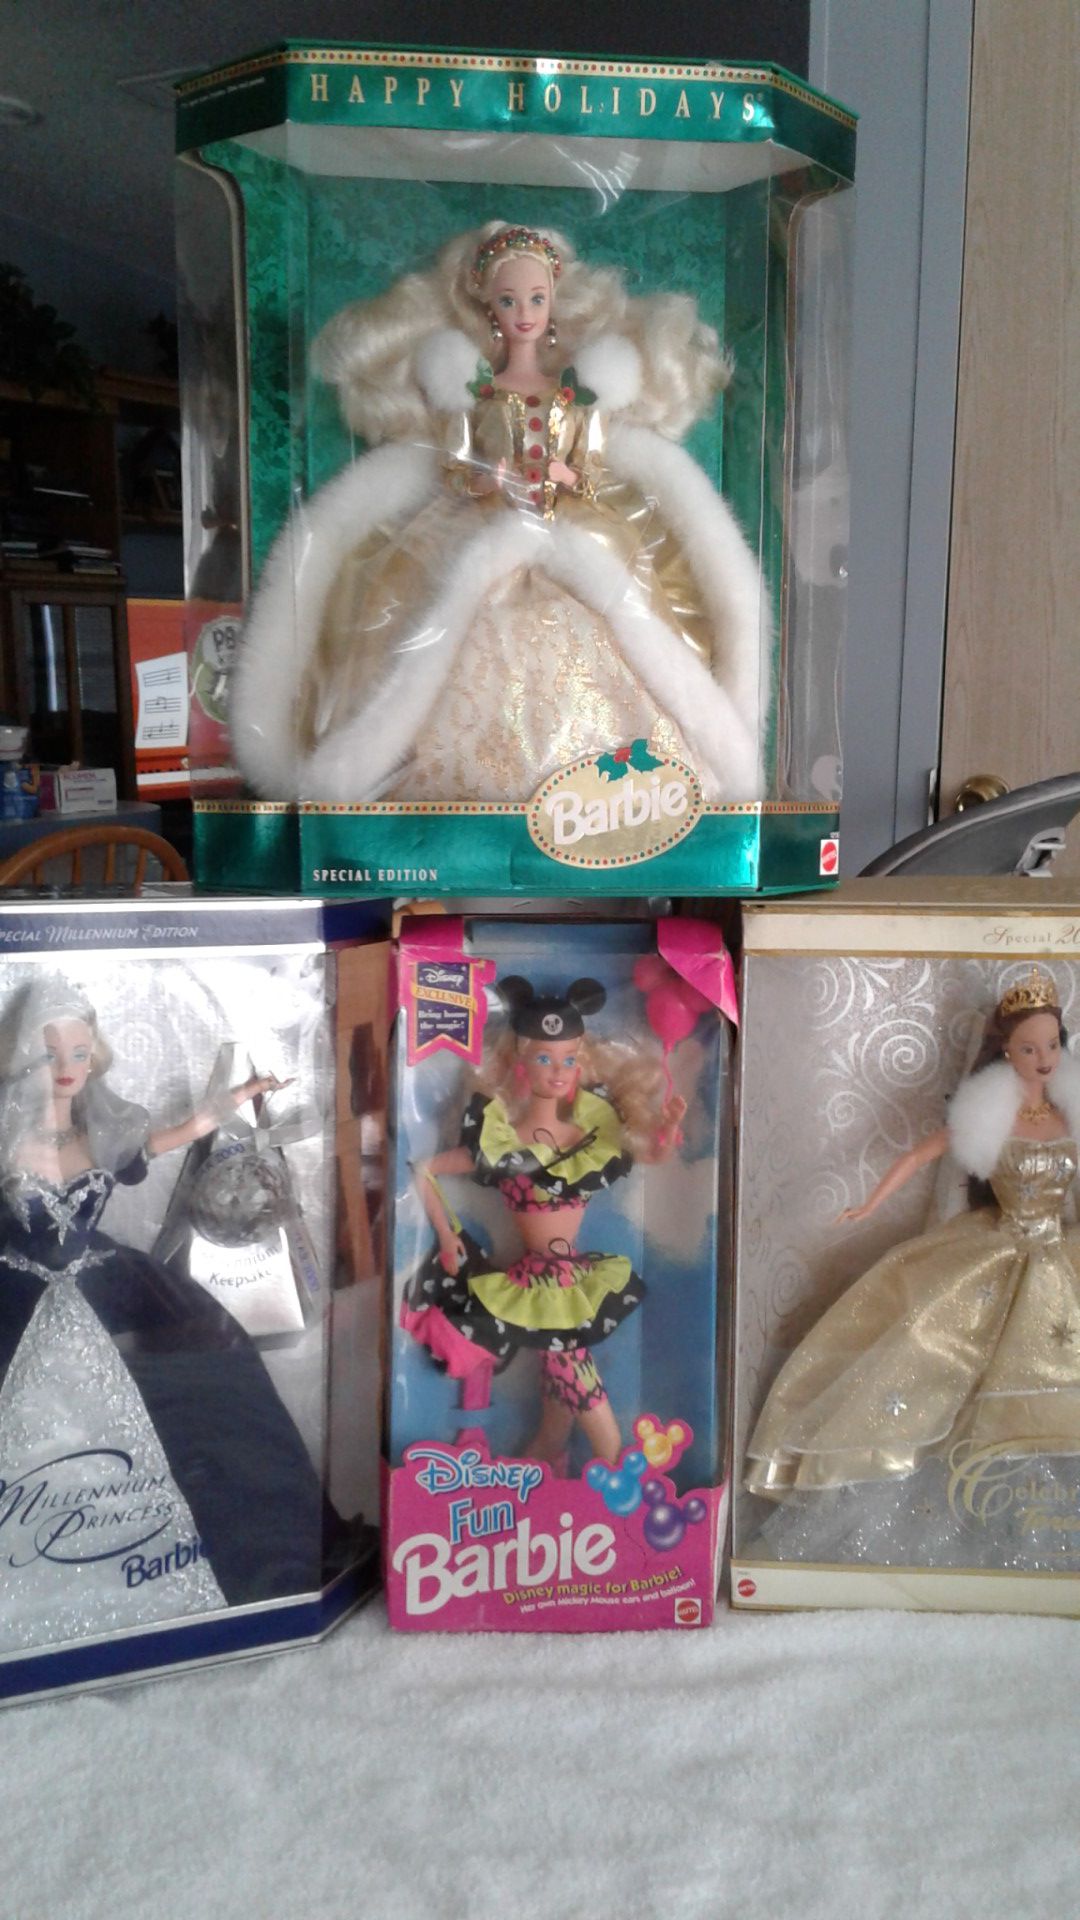 Disney fun Barbie celebration Teresa. Millennium princess happy holidays